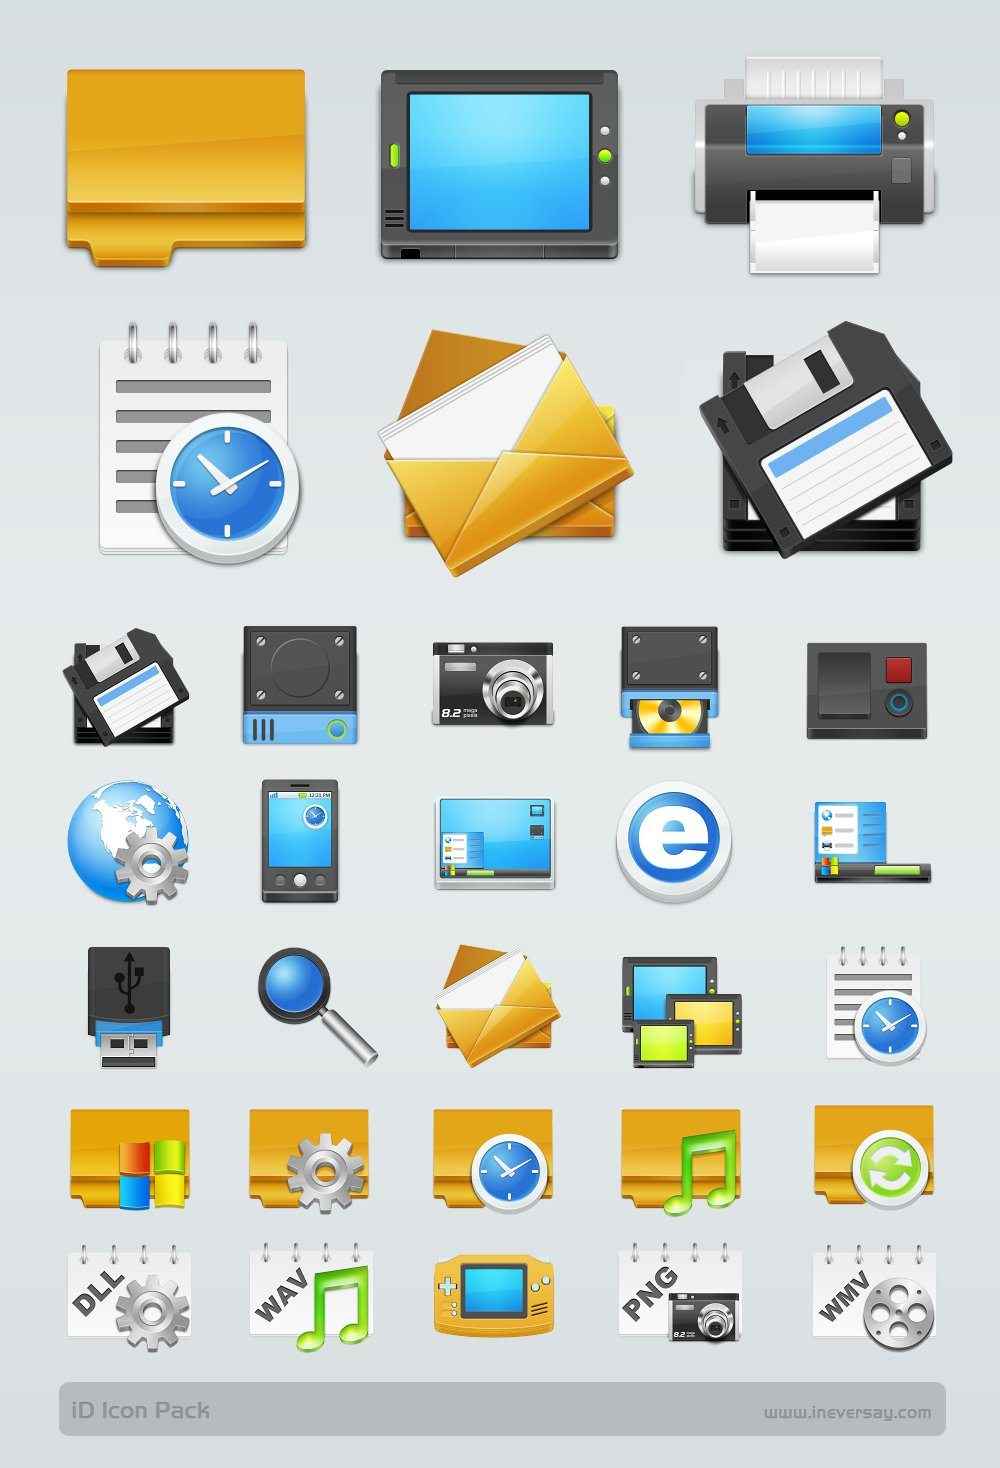 Windows Icons Set [ICO File]